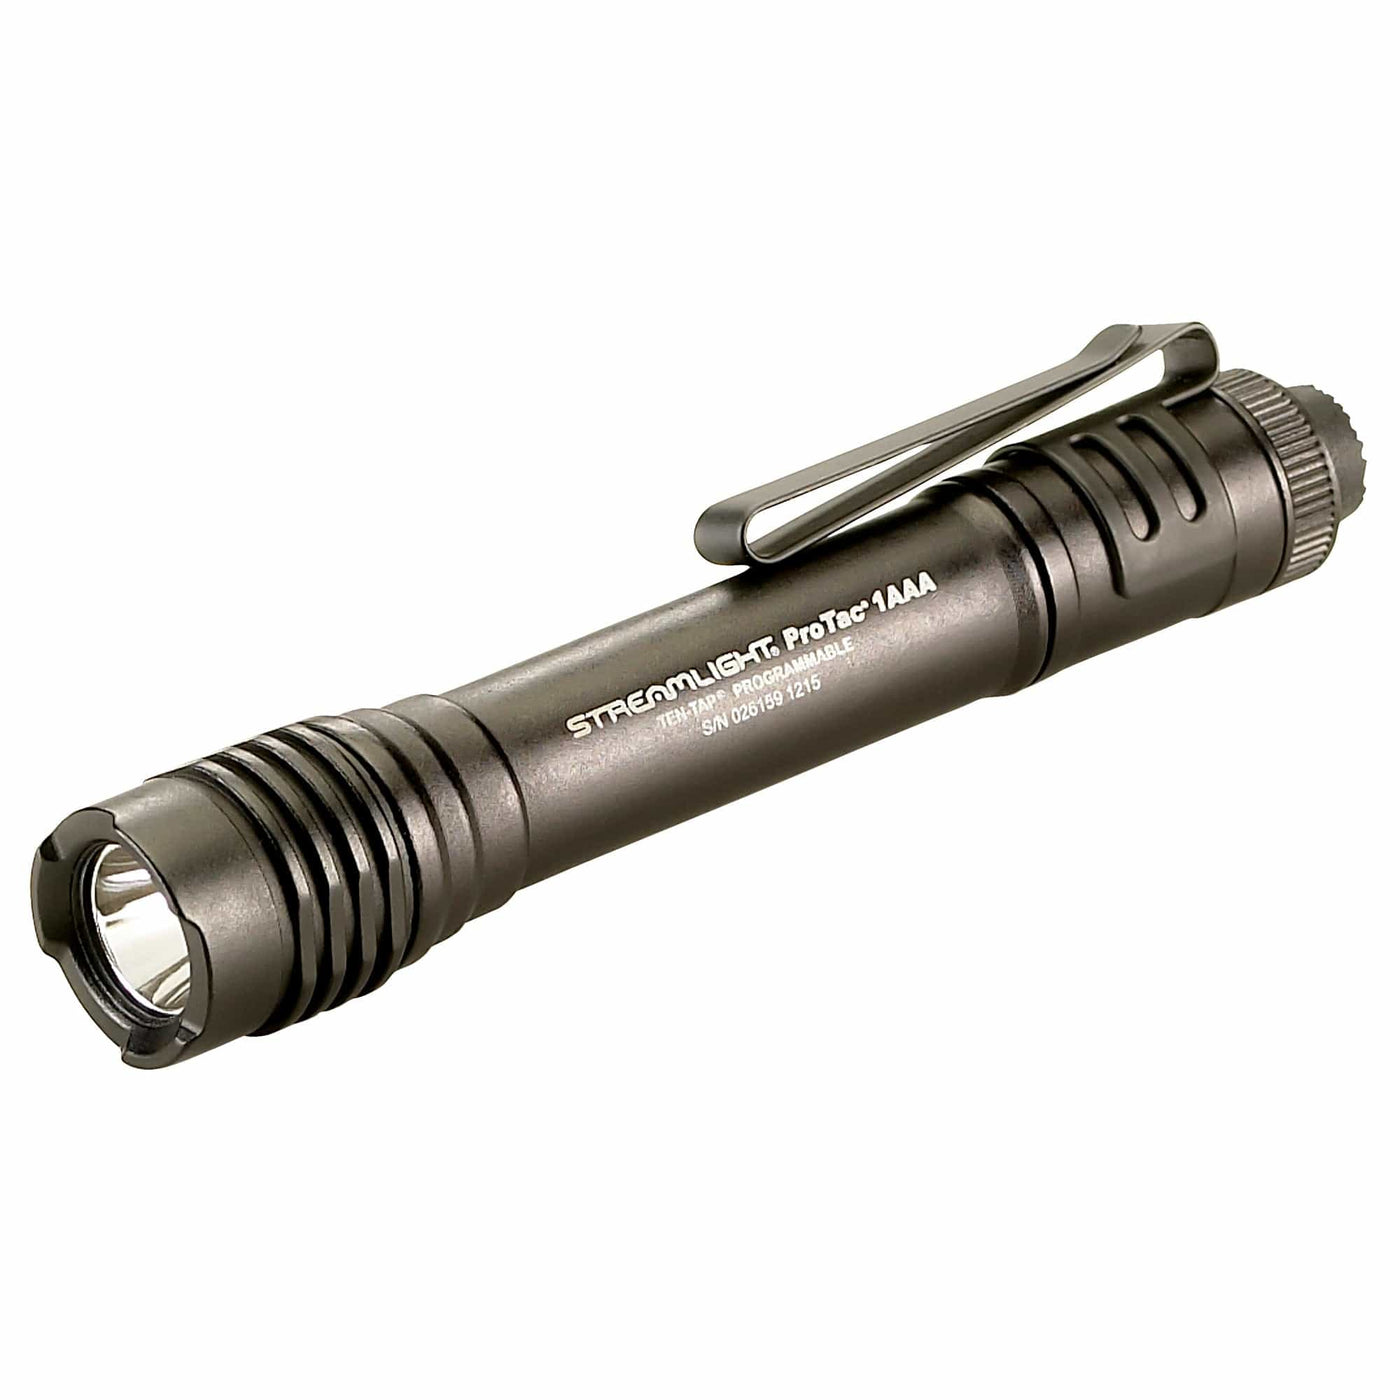 Streamlight Streamlight Pt 1aaa Flashlight - White Led W/pocket Clip Accessories